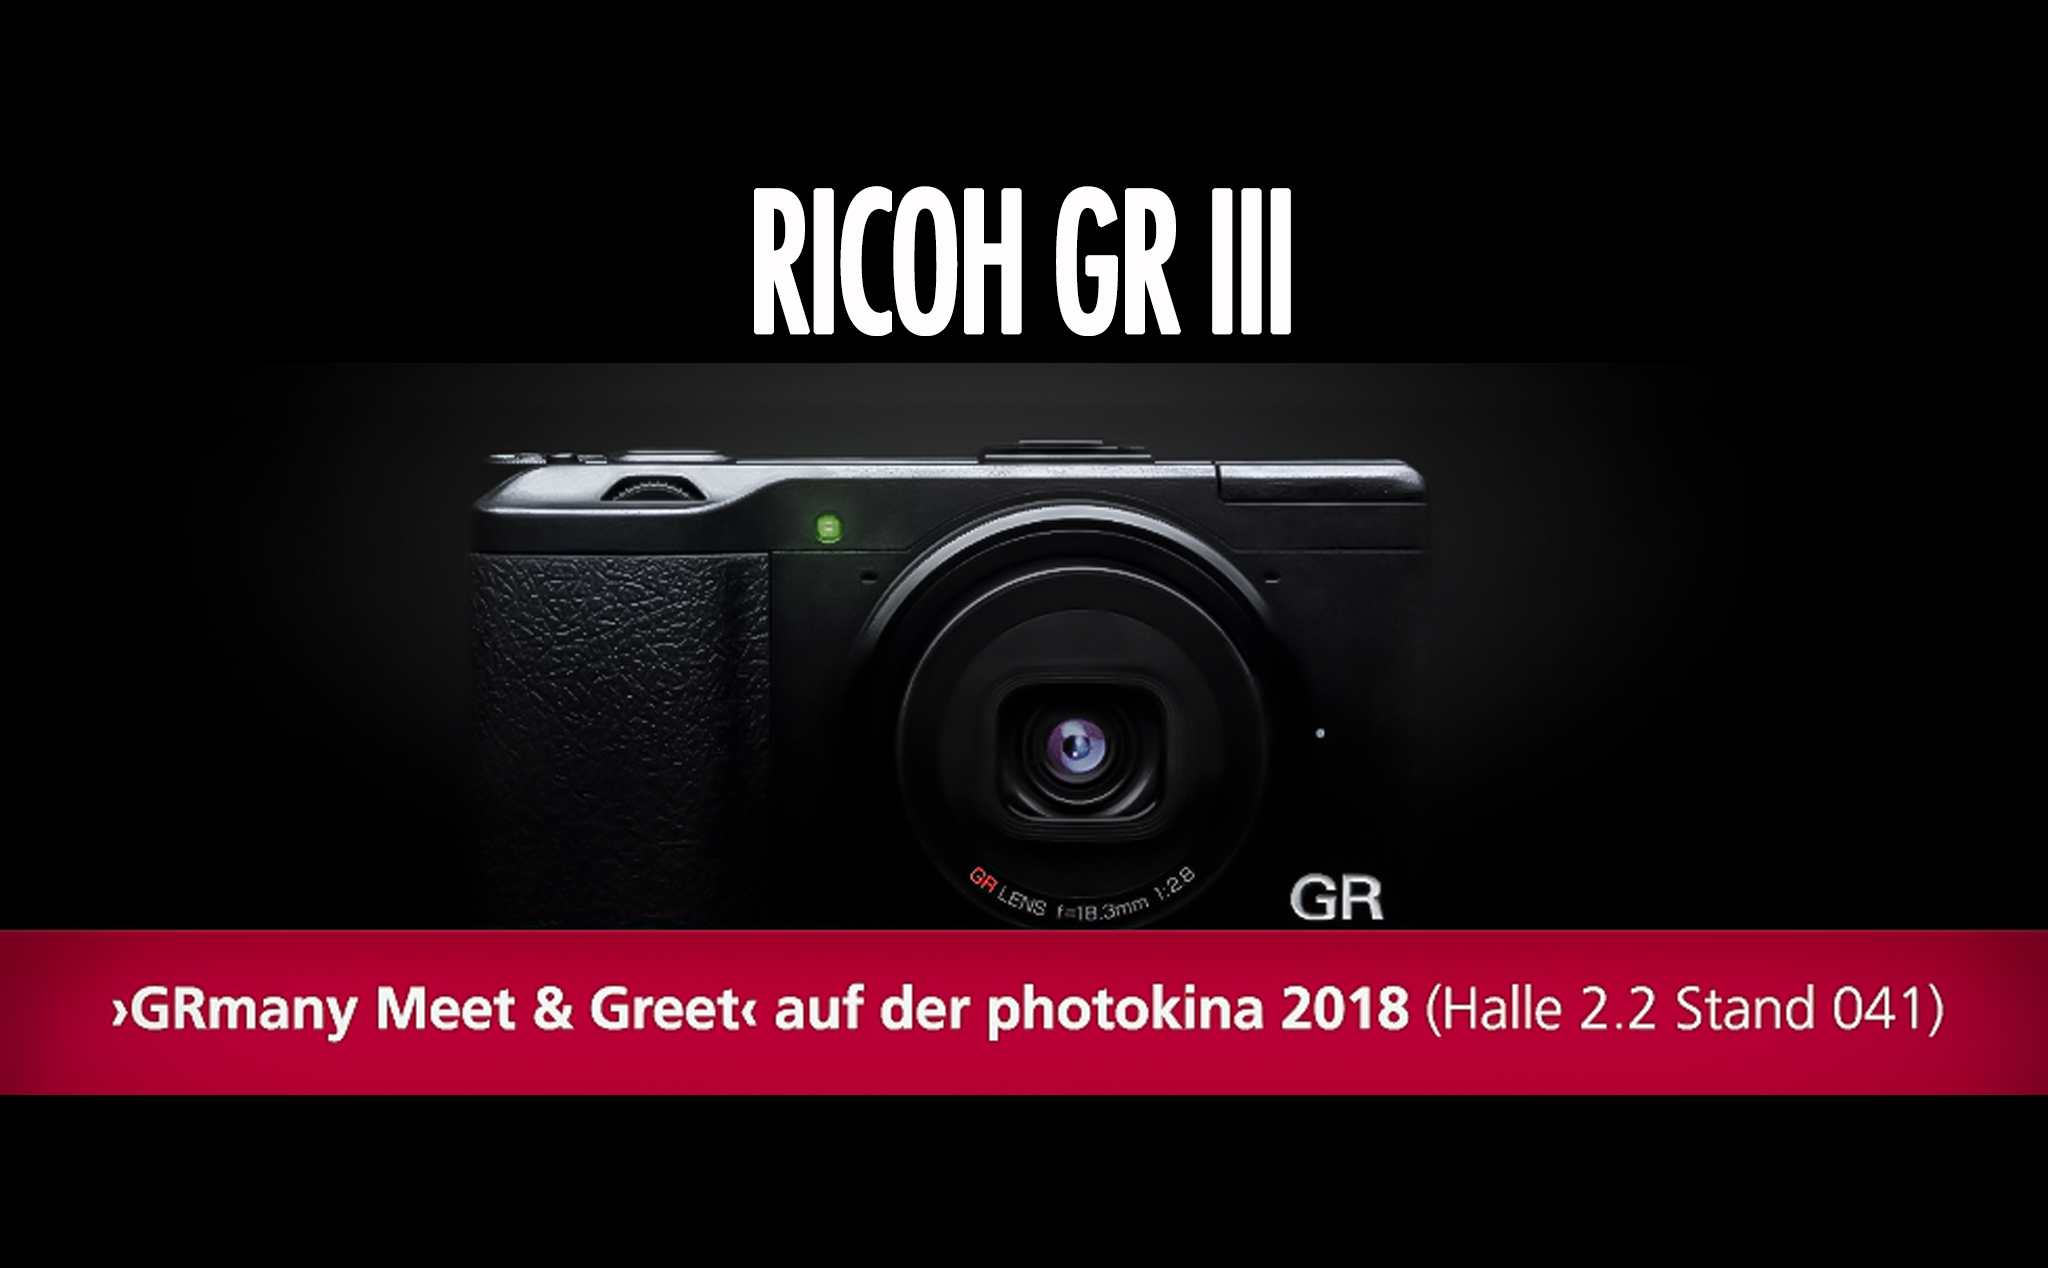 Ricoh ra mắt GR III tại Photokina 2018?